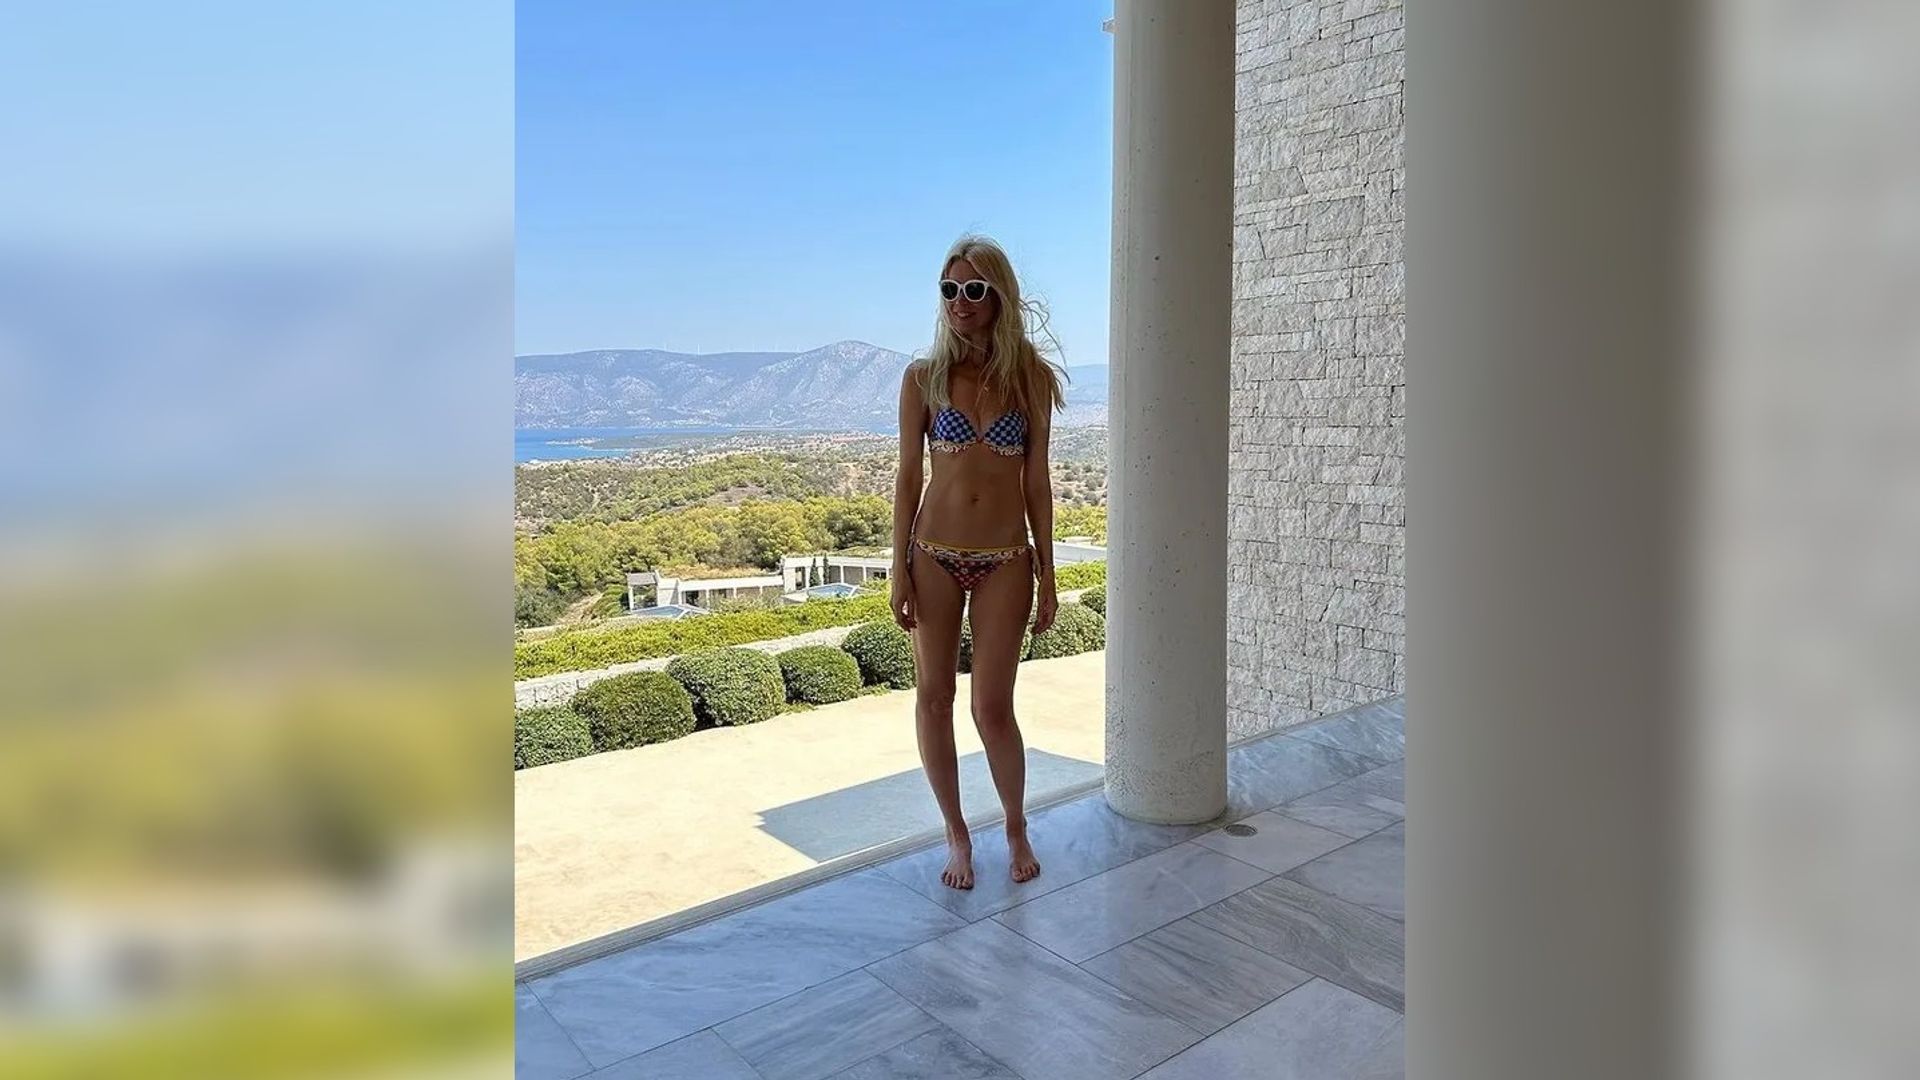 Claudia Schiffer celebrating her birthday in Greece